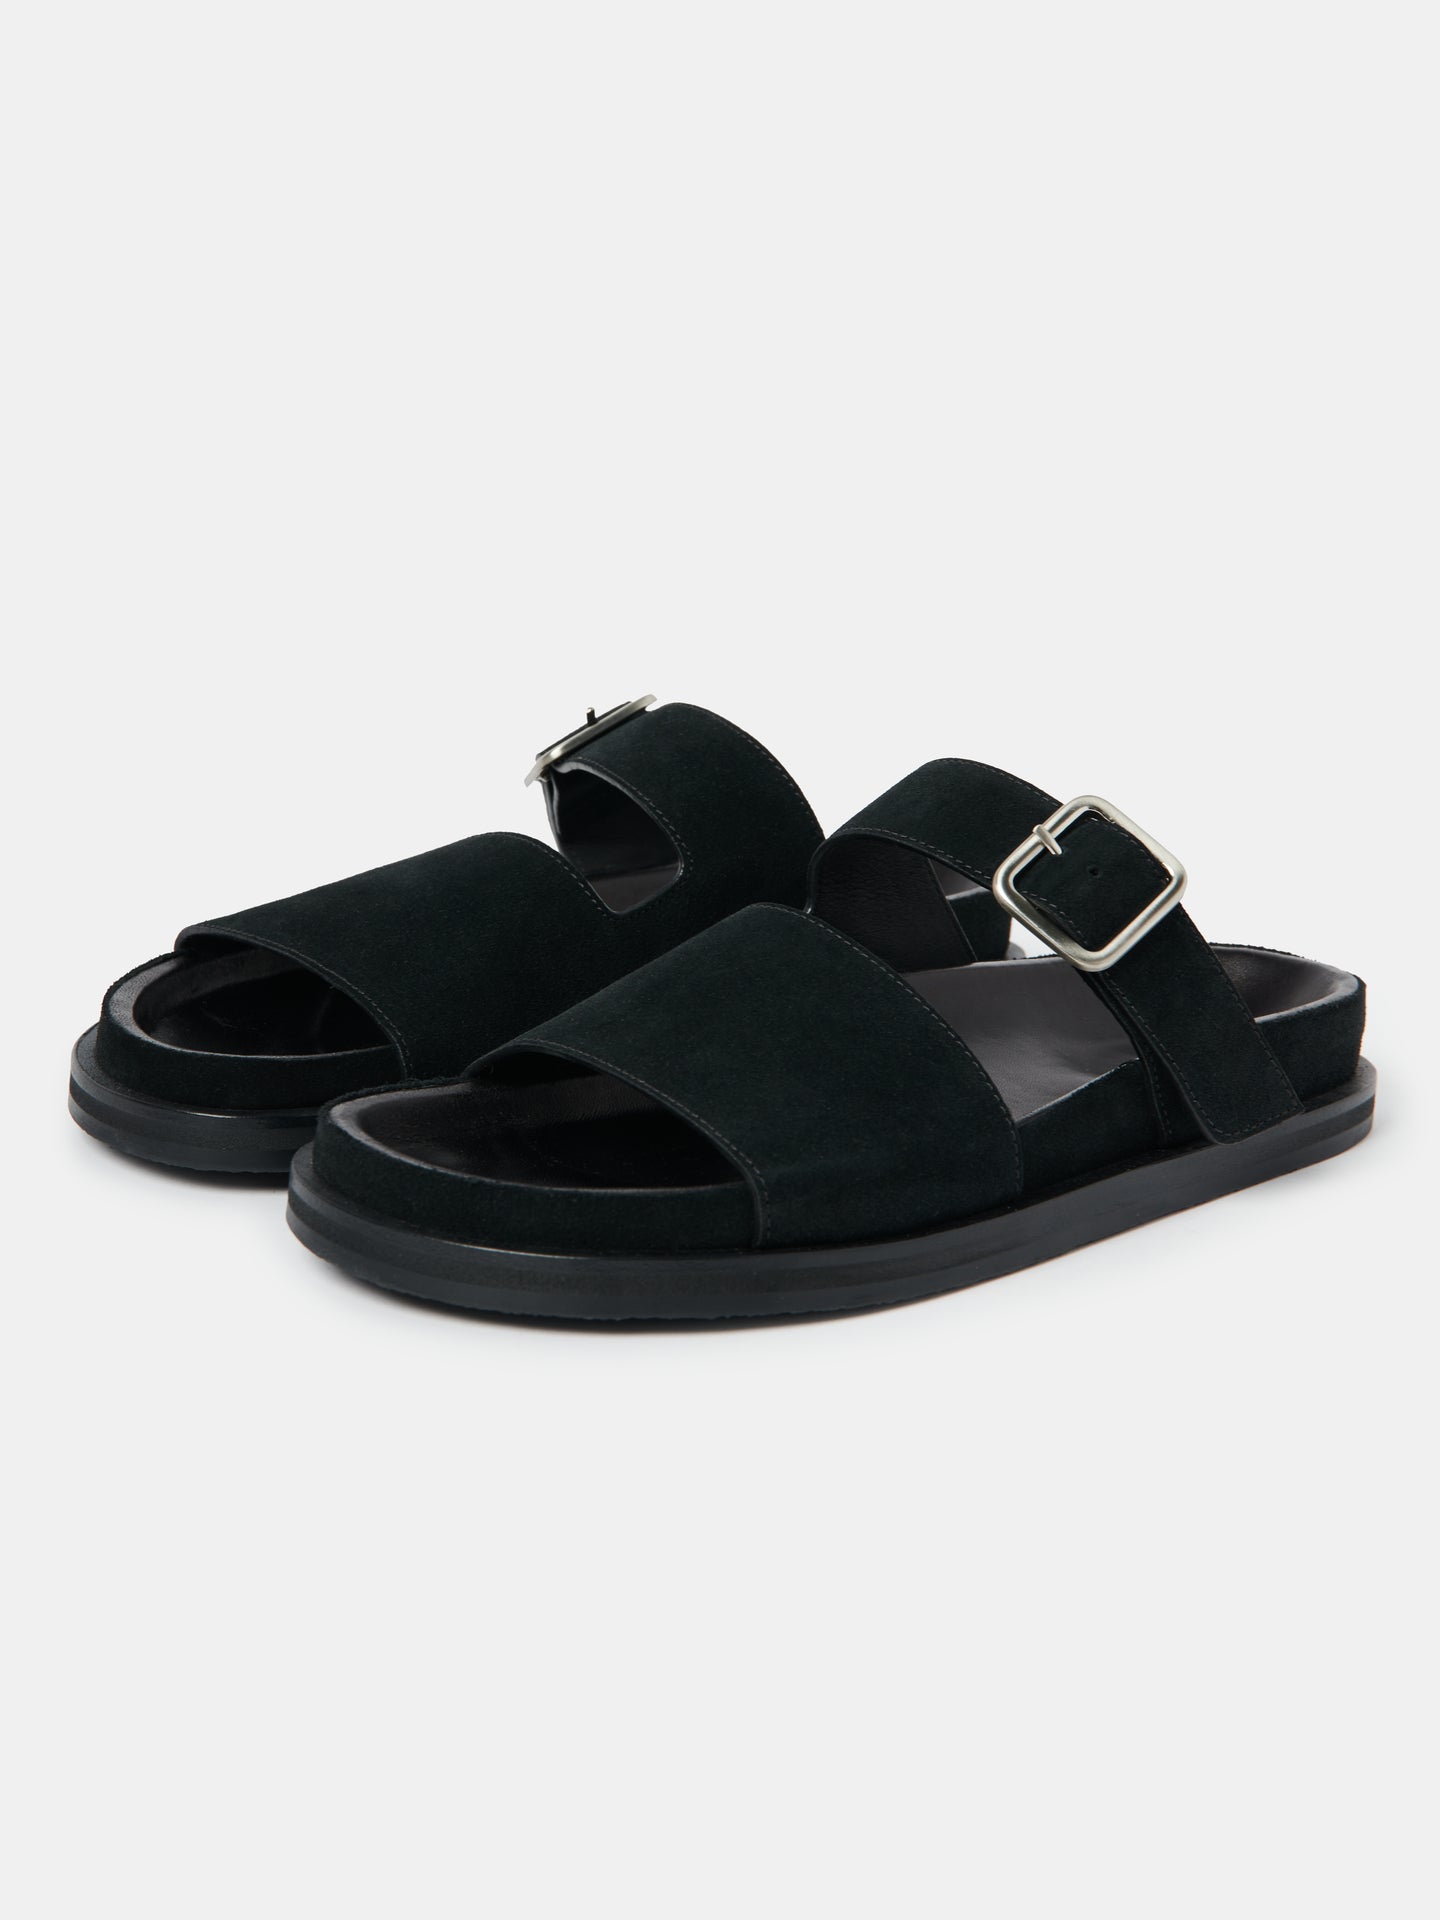 Men's Sole Sandal in Black